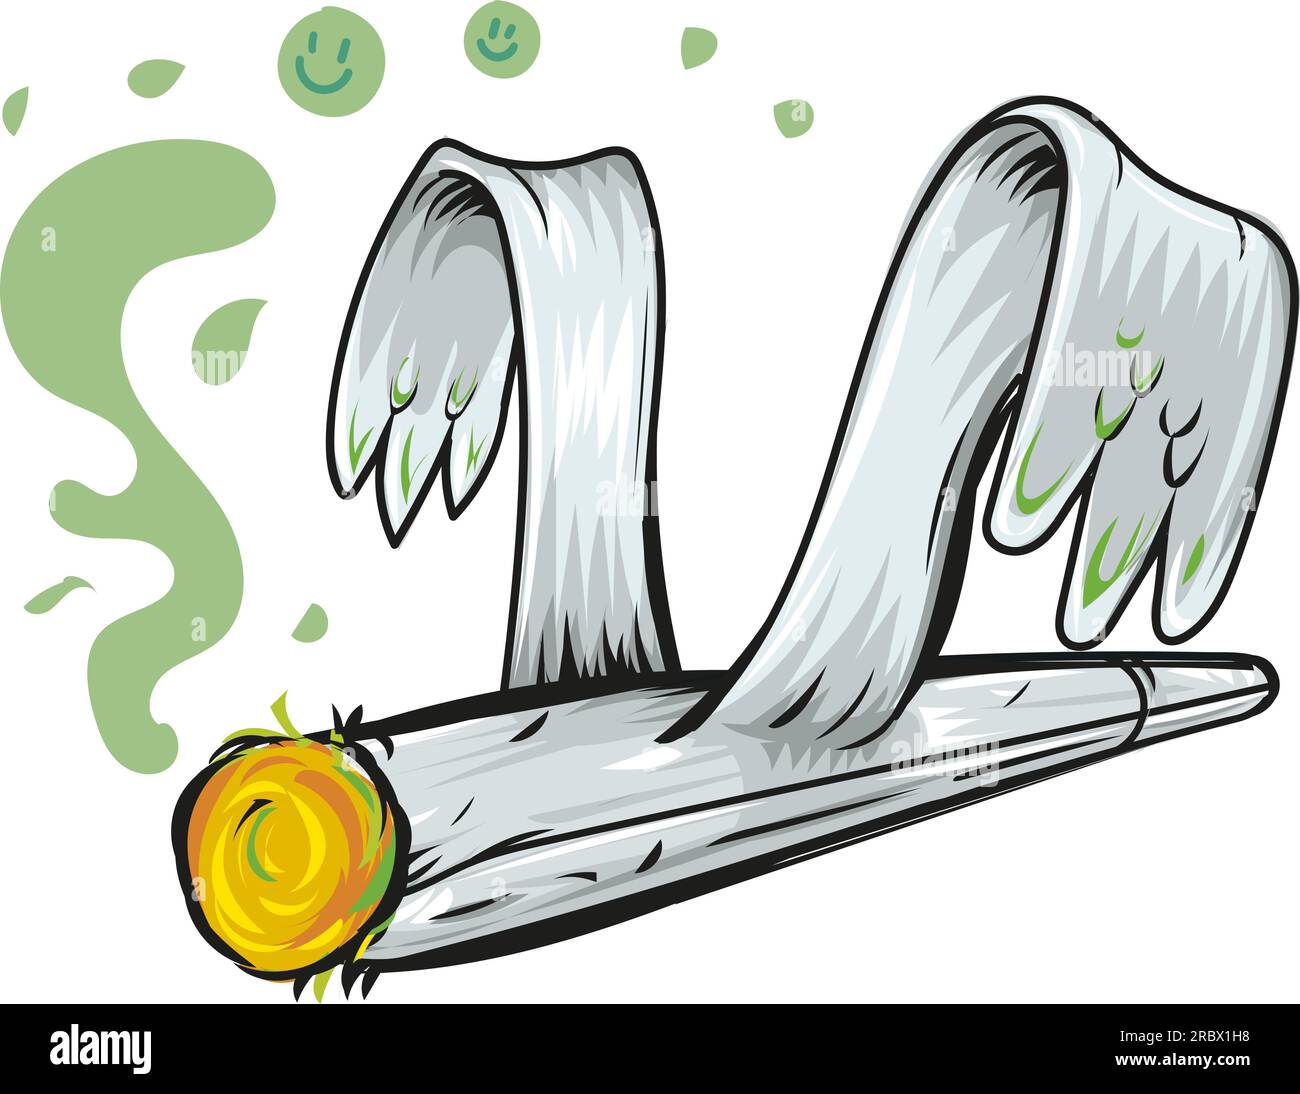 Smoking rolled marijuana joint cartoon vector illustration Stock Vector